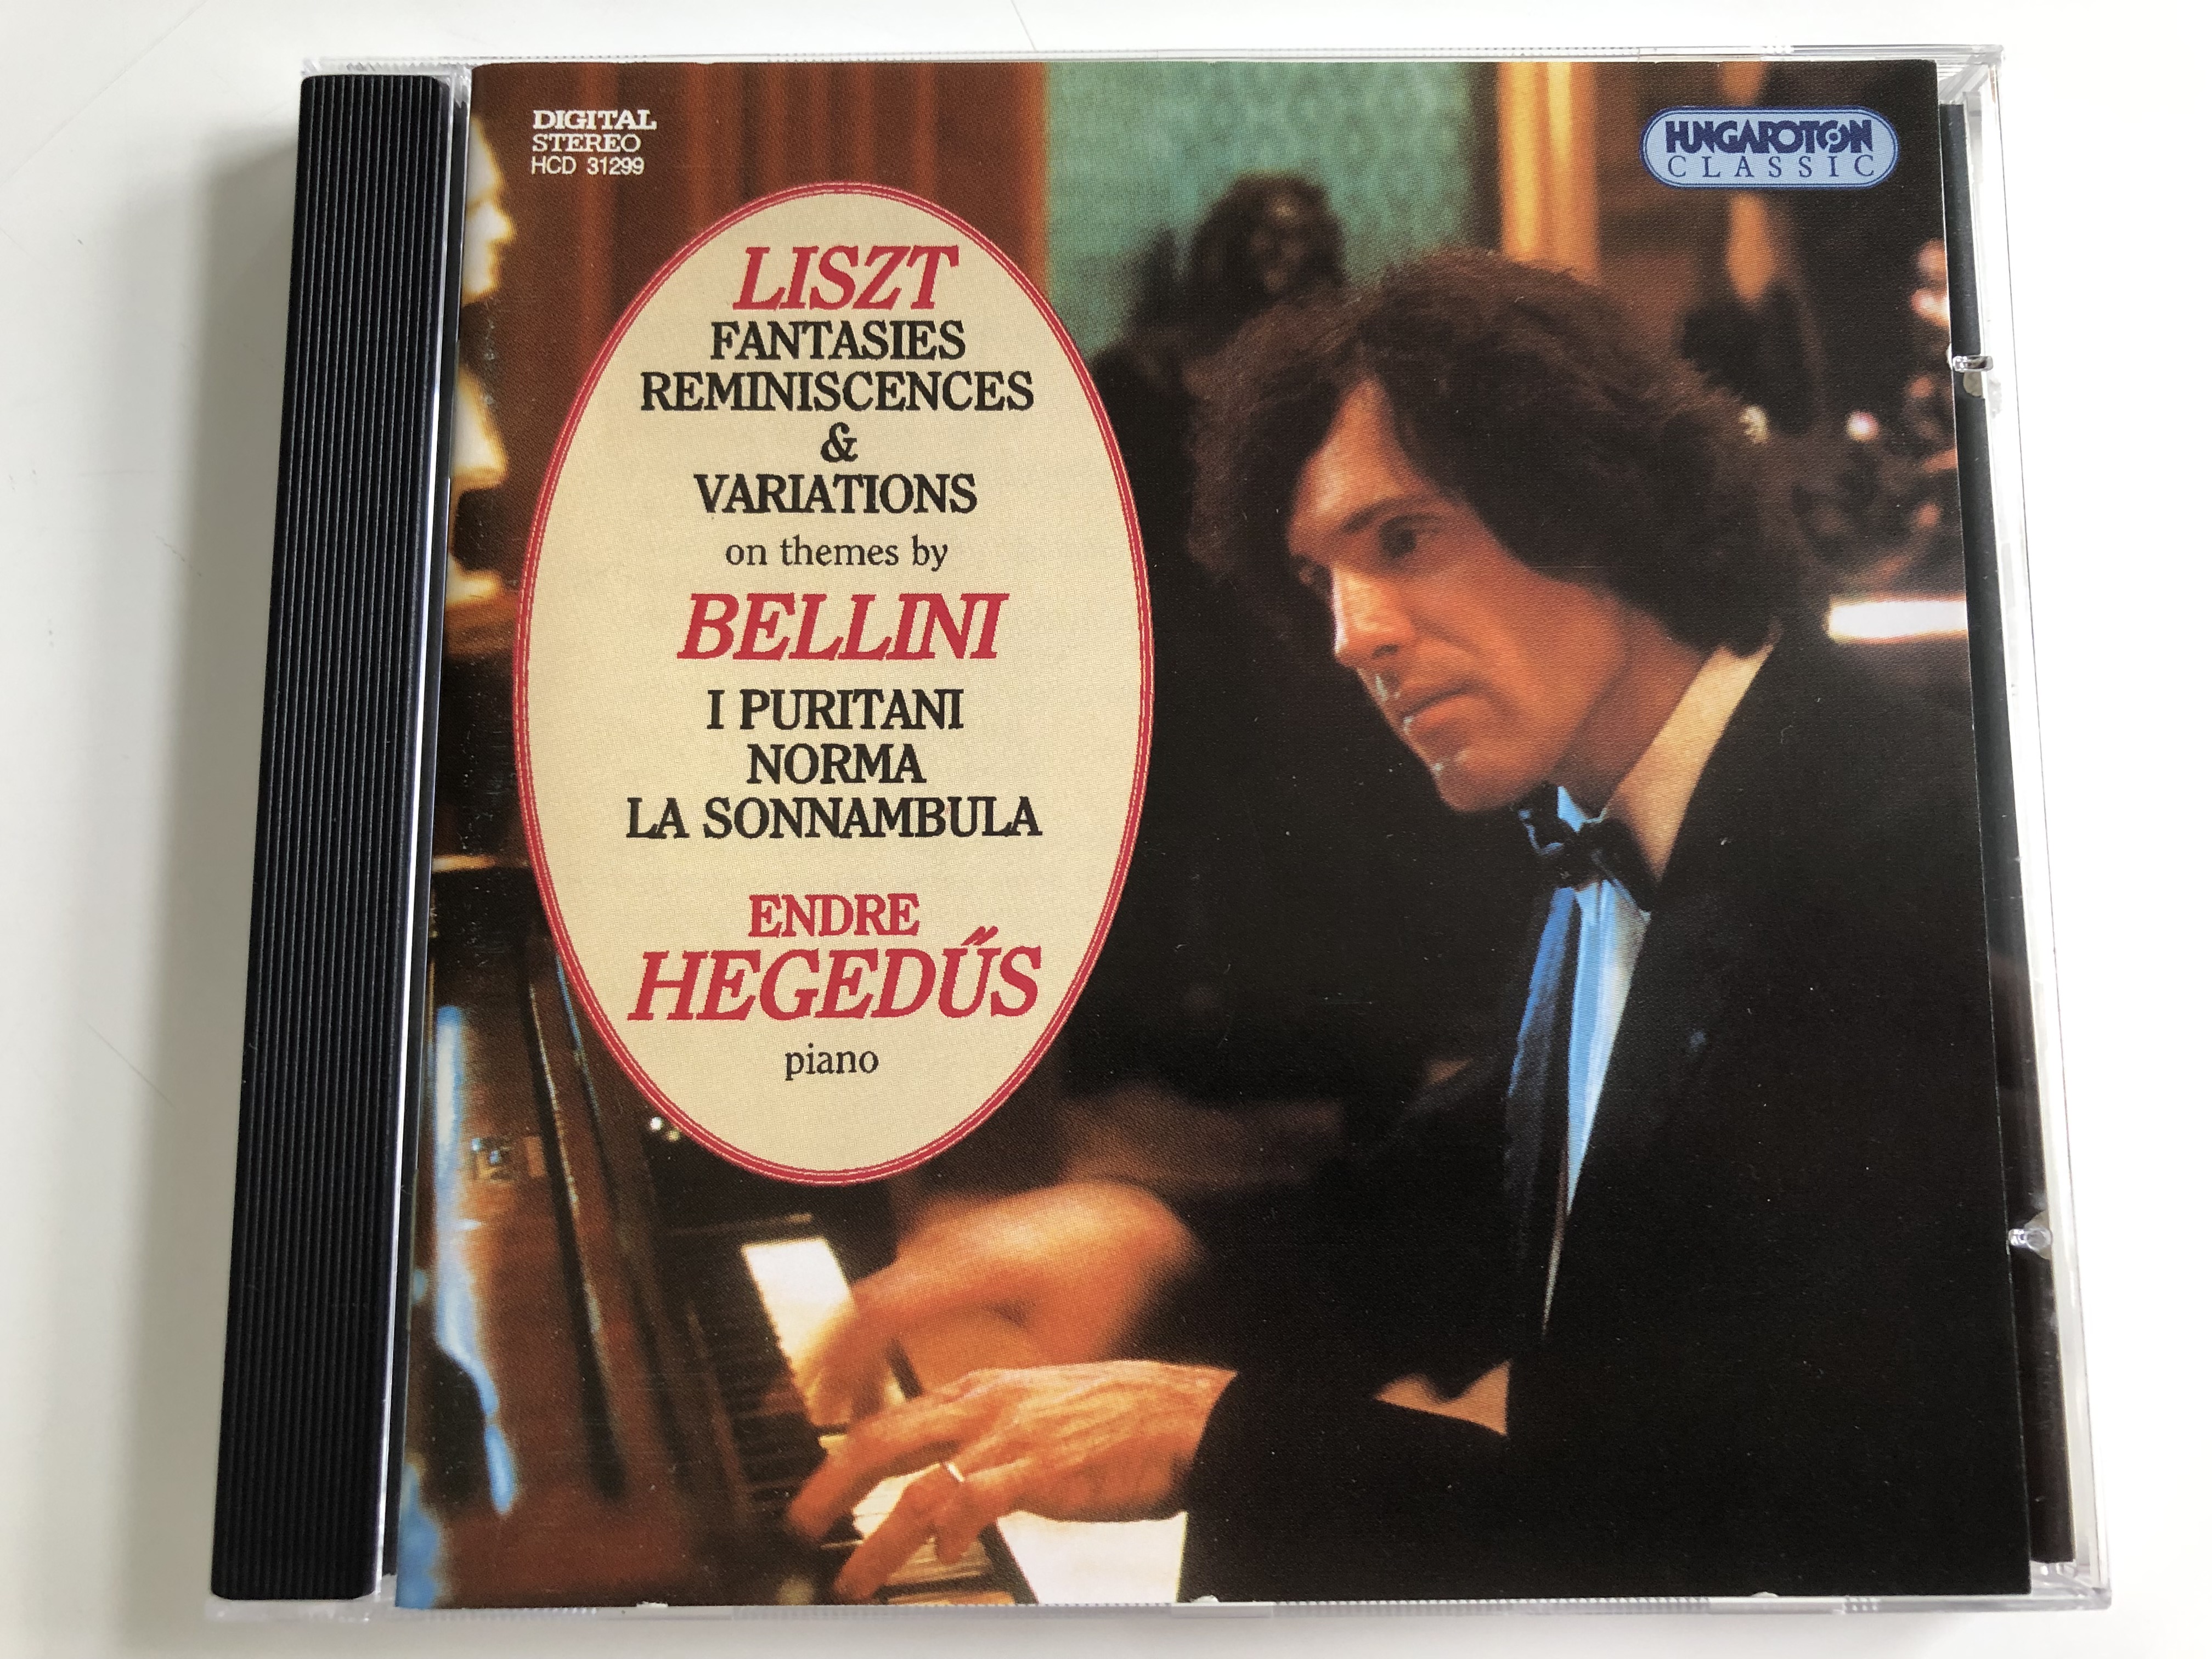 liszt-fantasies-reminiscences-variations-on-themes-by-bellini-i-puritani-norma-la-sonnambula-piano-endre-heged-s-hungaroton-audio-cd-1995-stereo-hcd-31299-1-.jpg